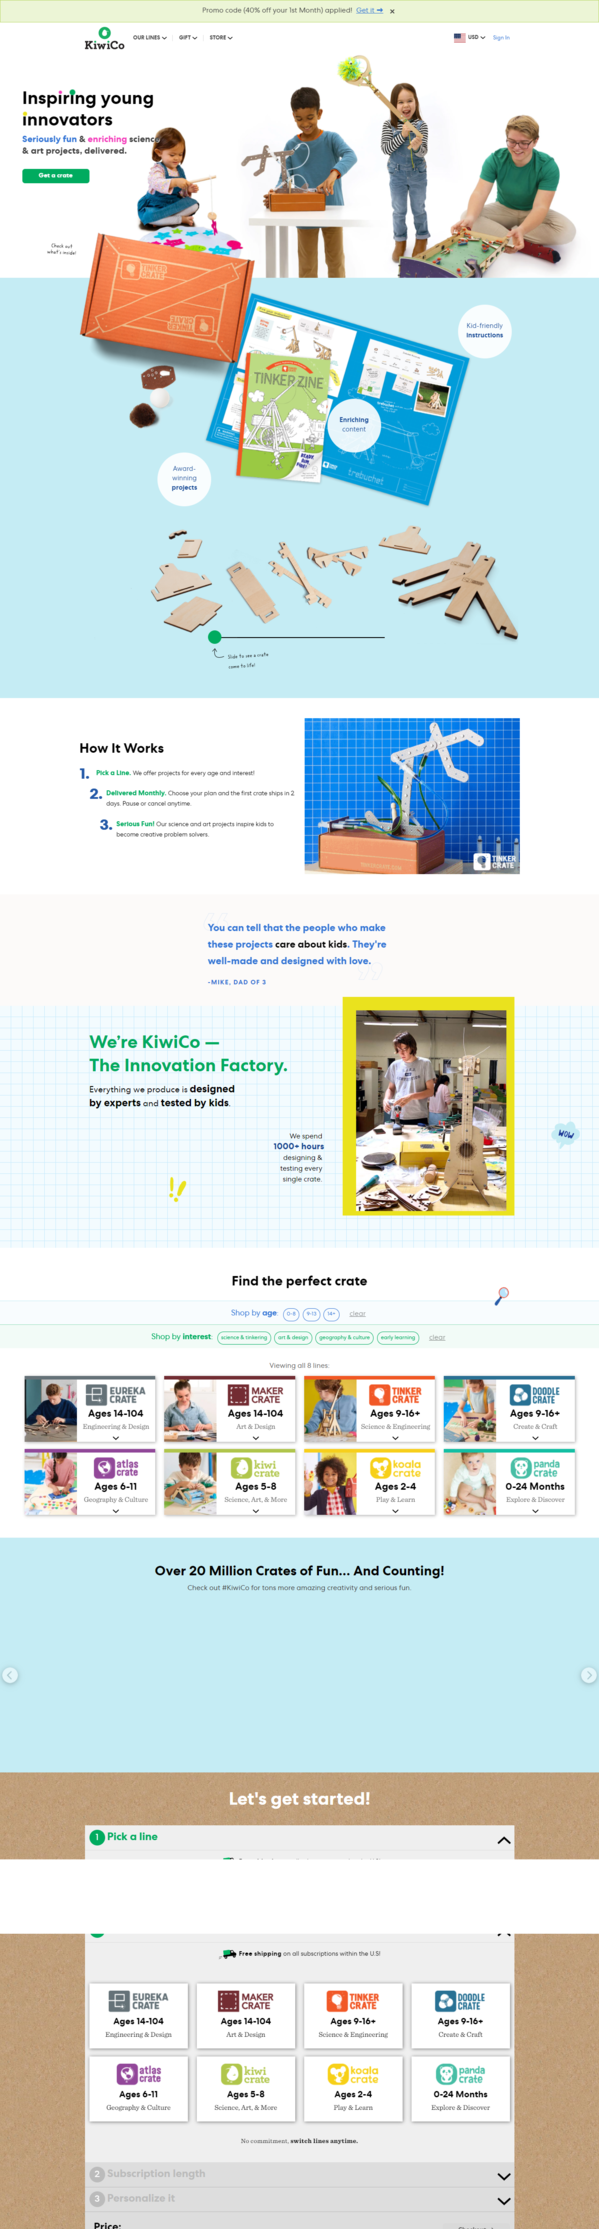 KiwiCo - STEM, STEAM & Science Kits for Kids - www.kiwico.com.png